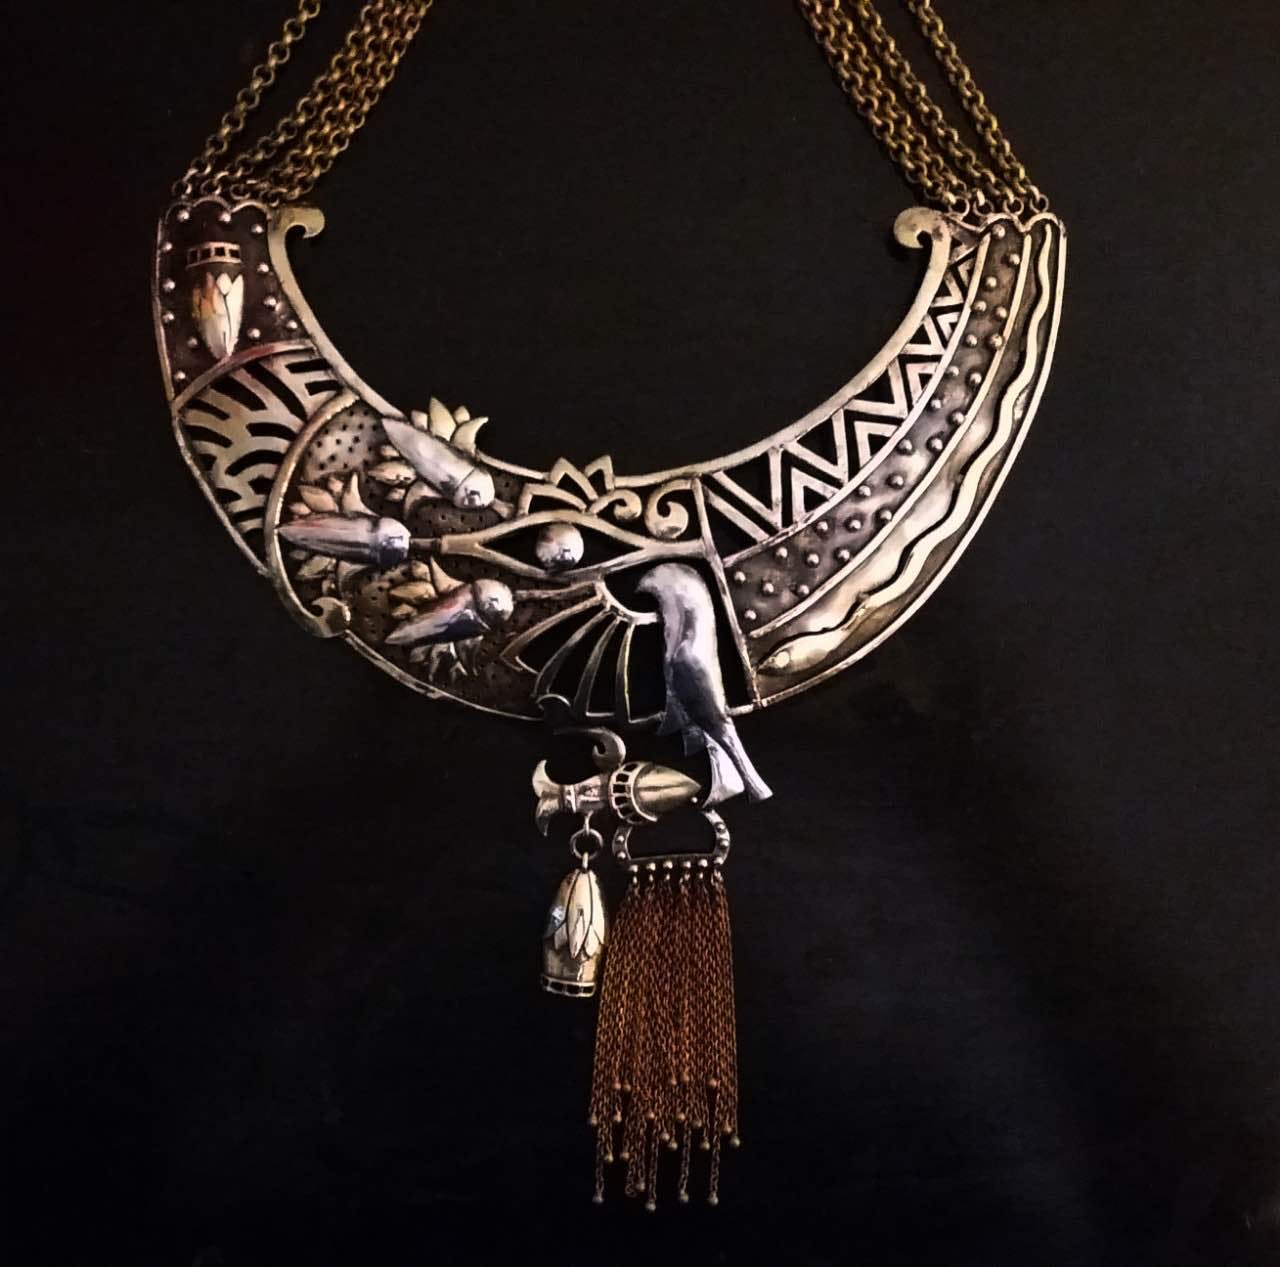 Necklace,Jewellery,Fashion accessory,Pendant,Metal,Chain,Neck,Silver,Choker